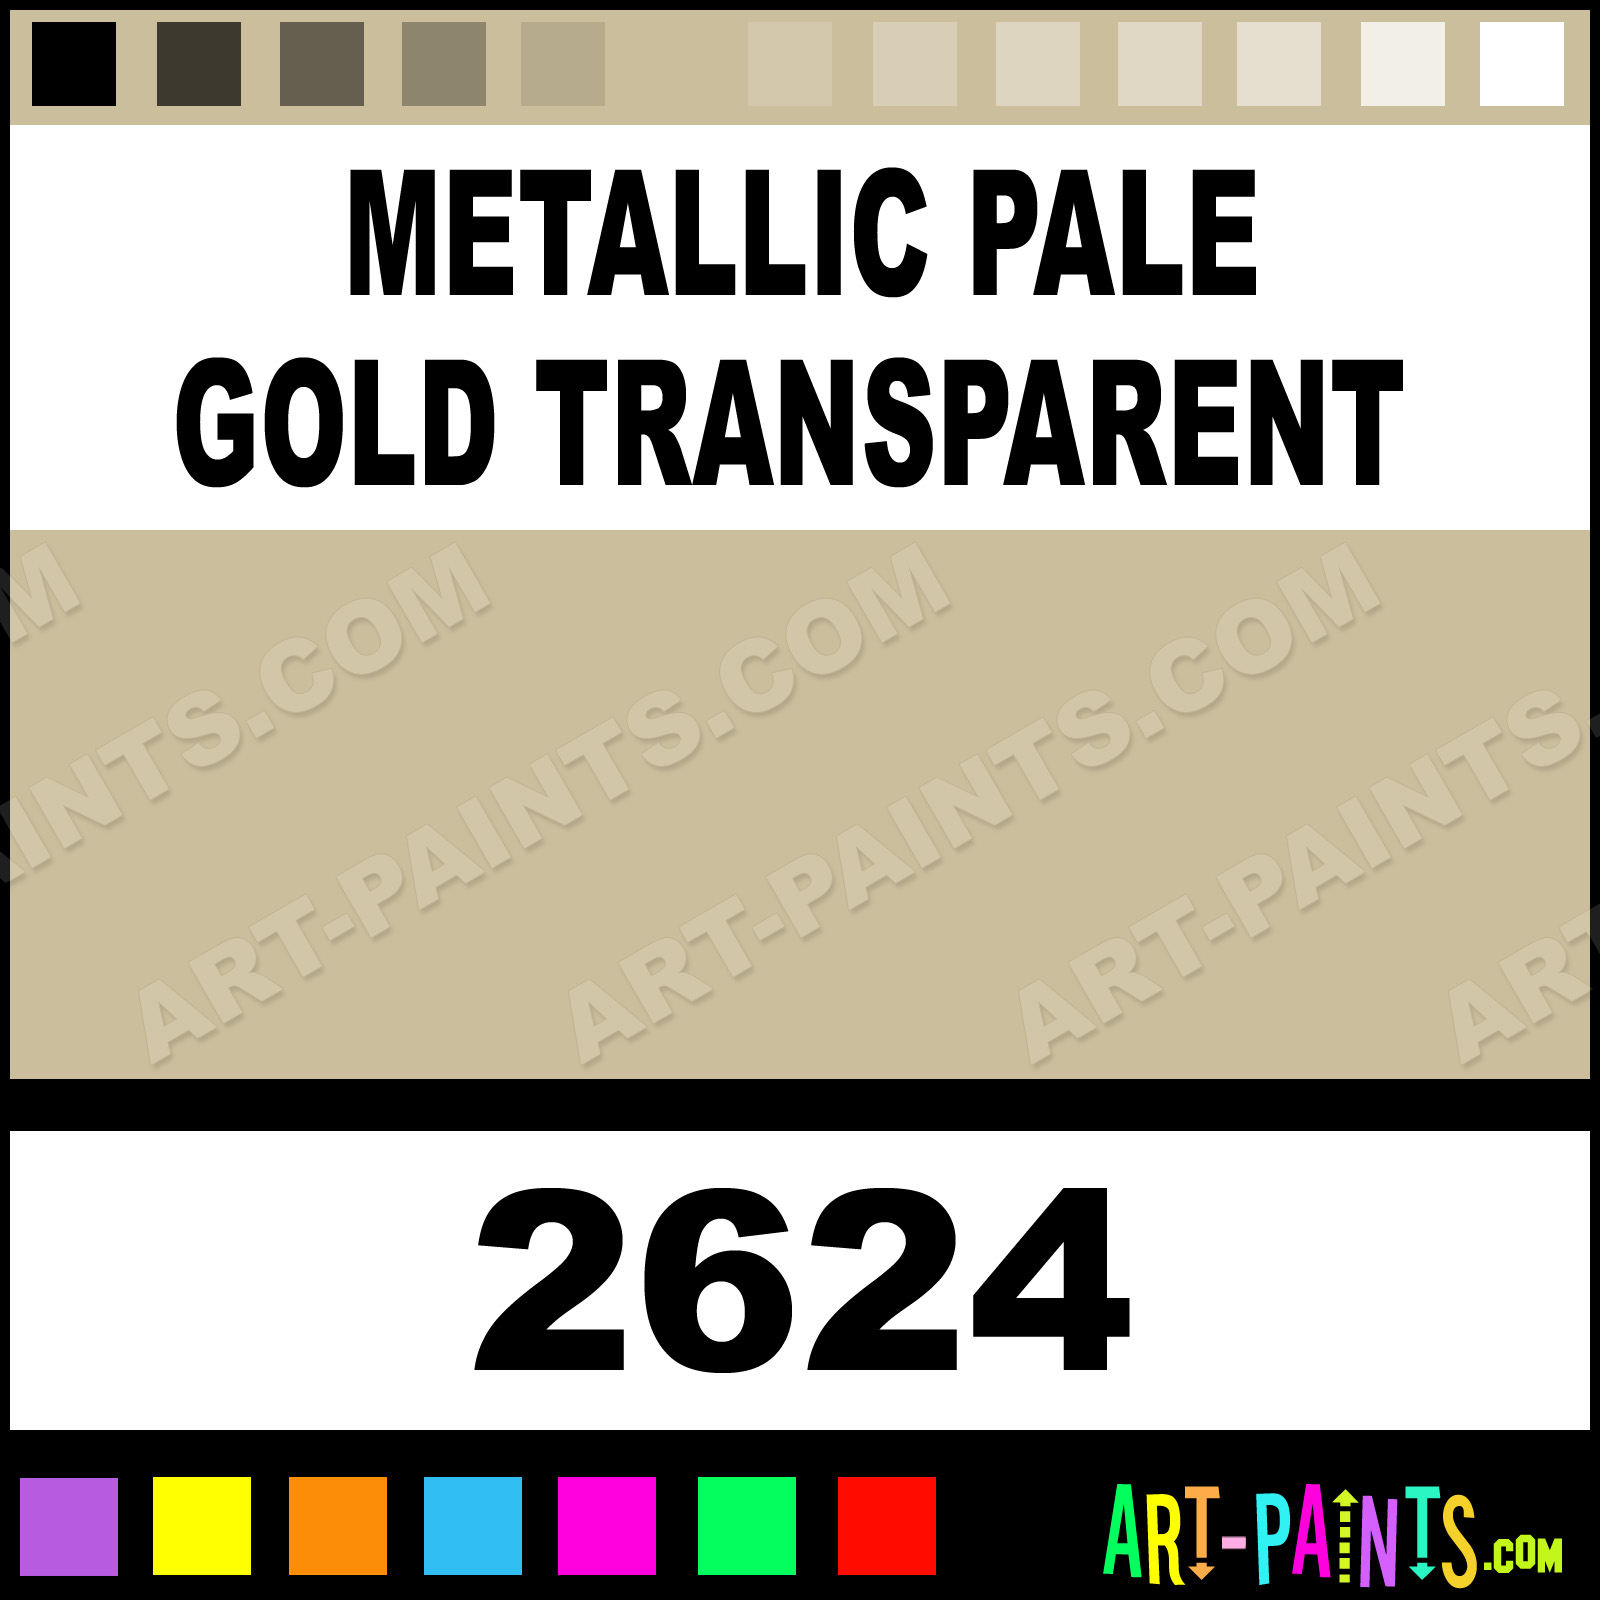 Metallic Pale Gold Transparent xlg